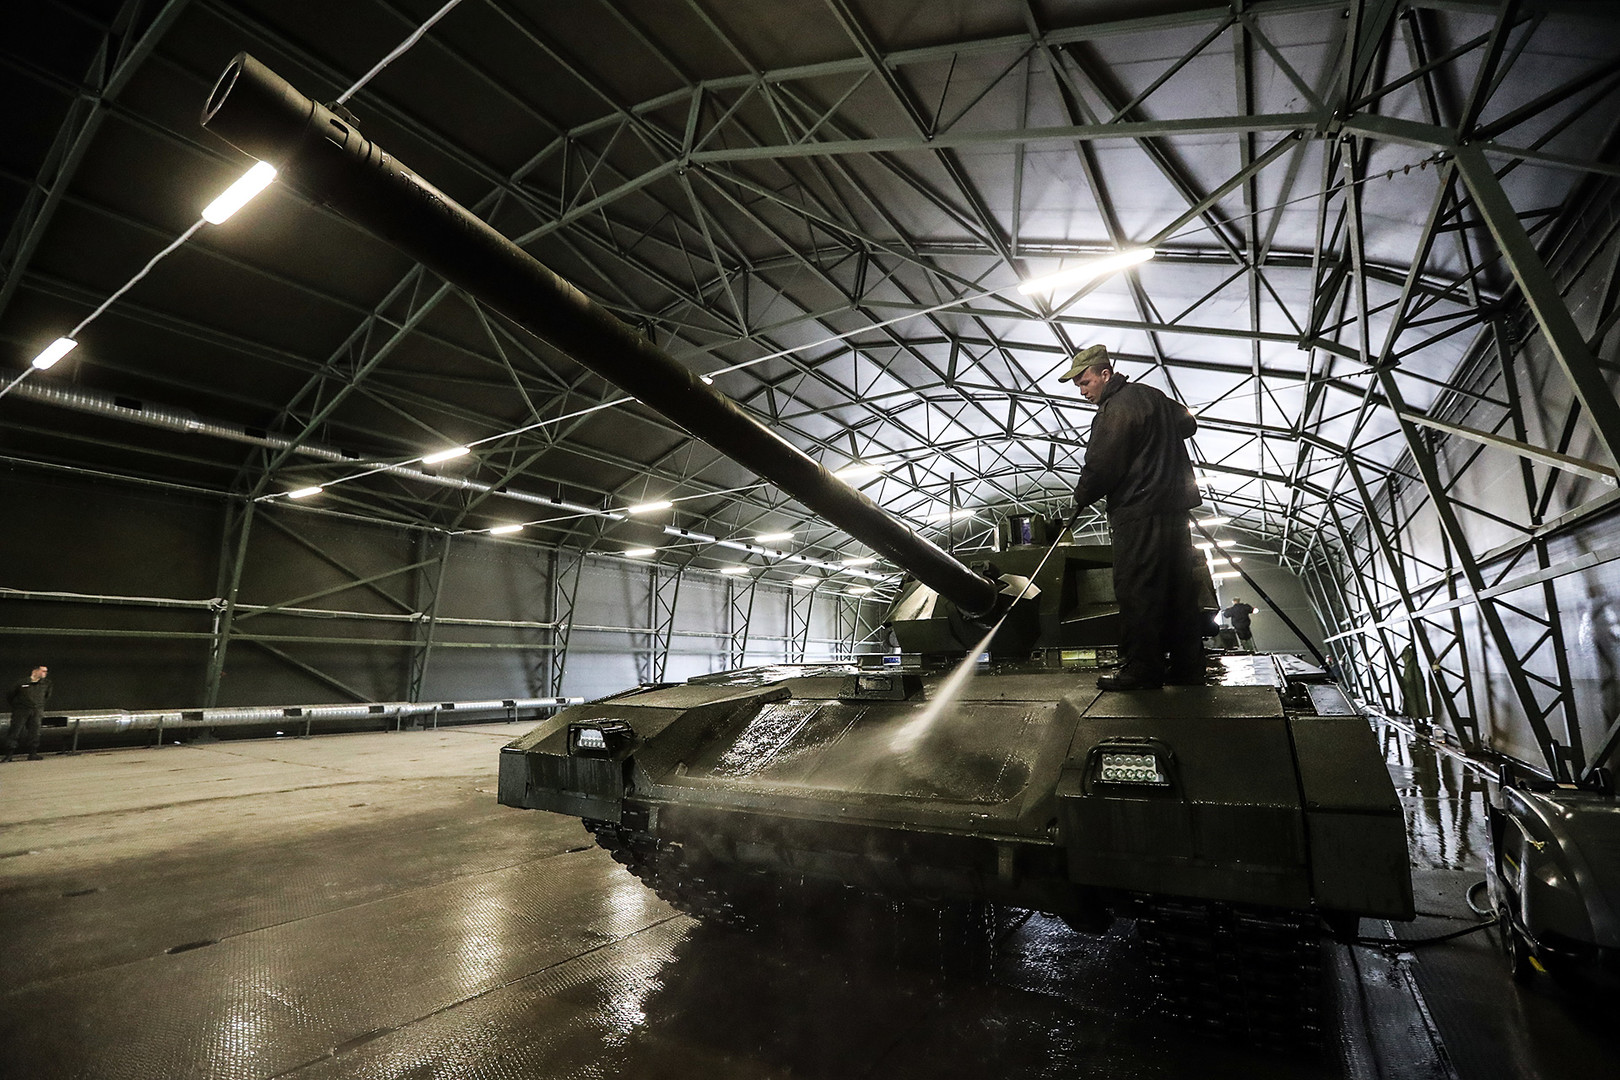 Seorang petugas membersihkan tank T-14 Armata di Moskow.